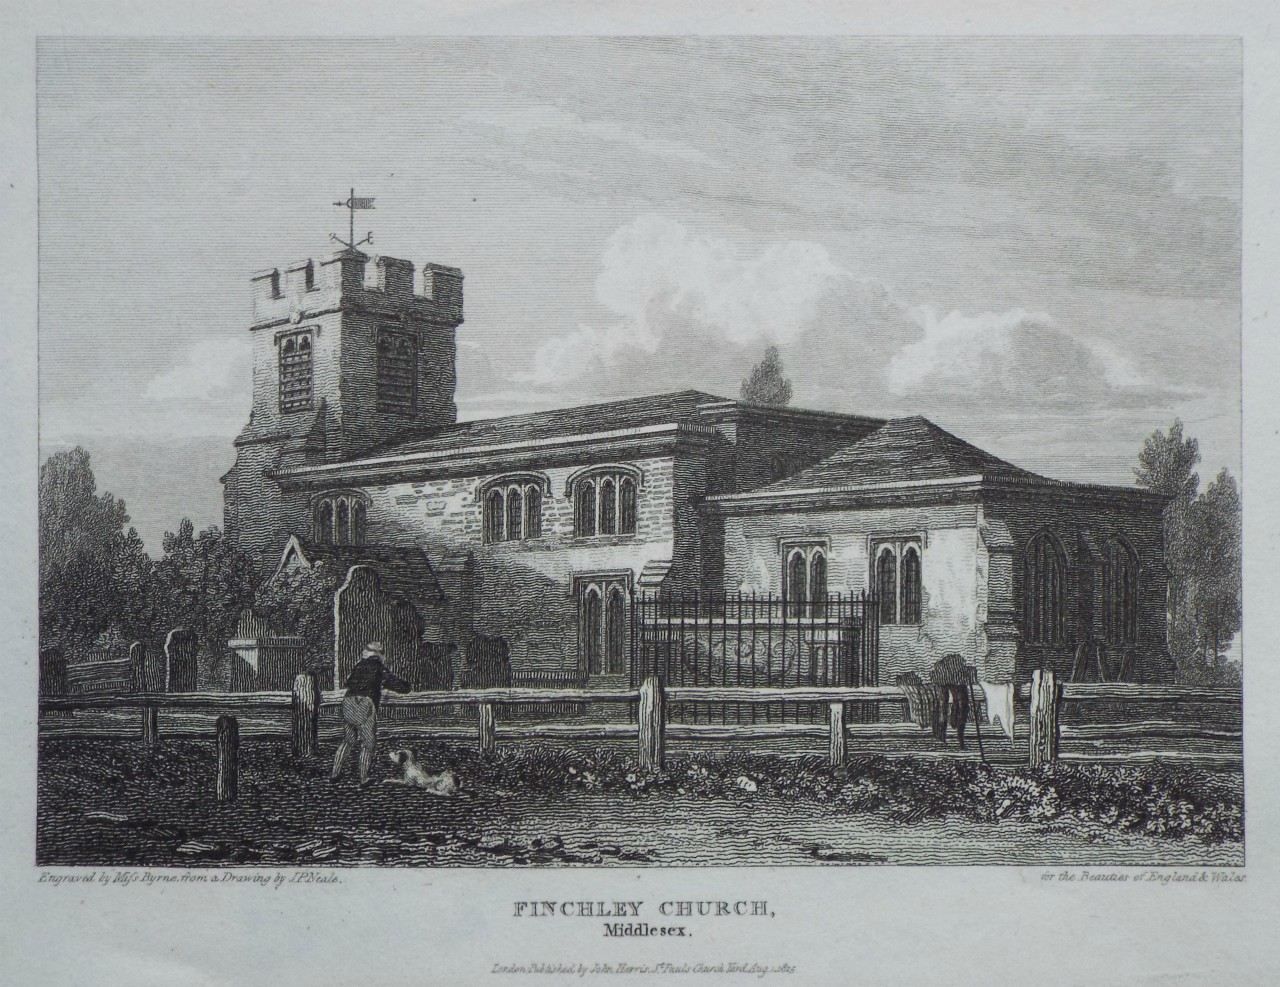 Print - Finchley Church, Middlesex. - Byrne